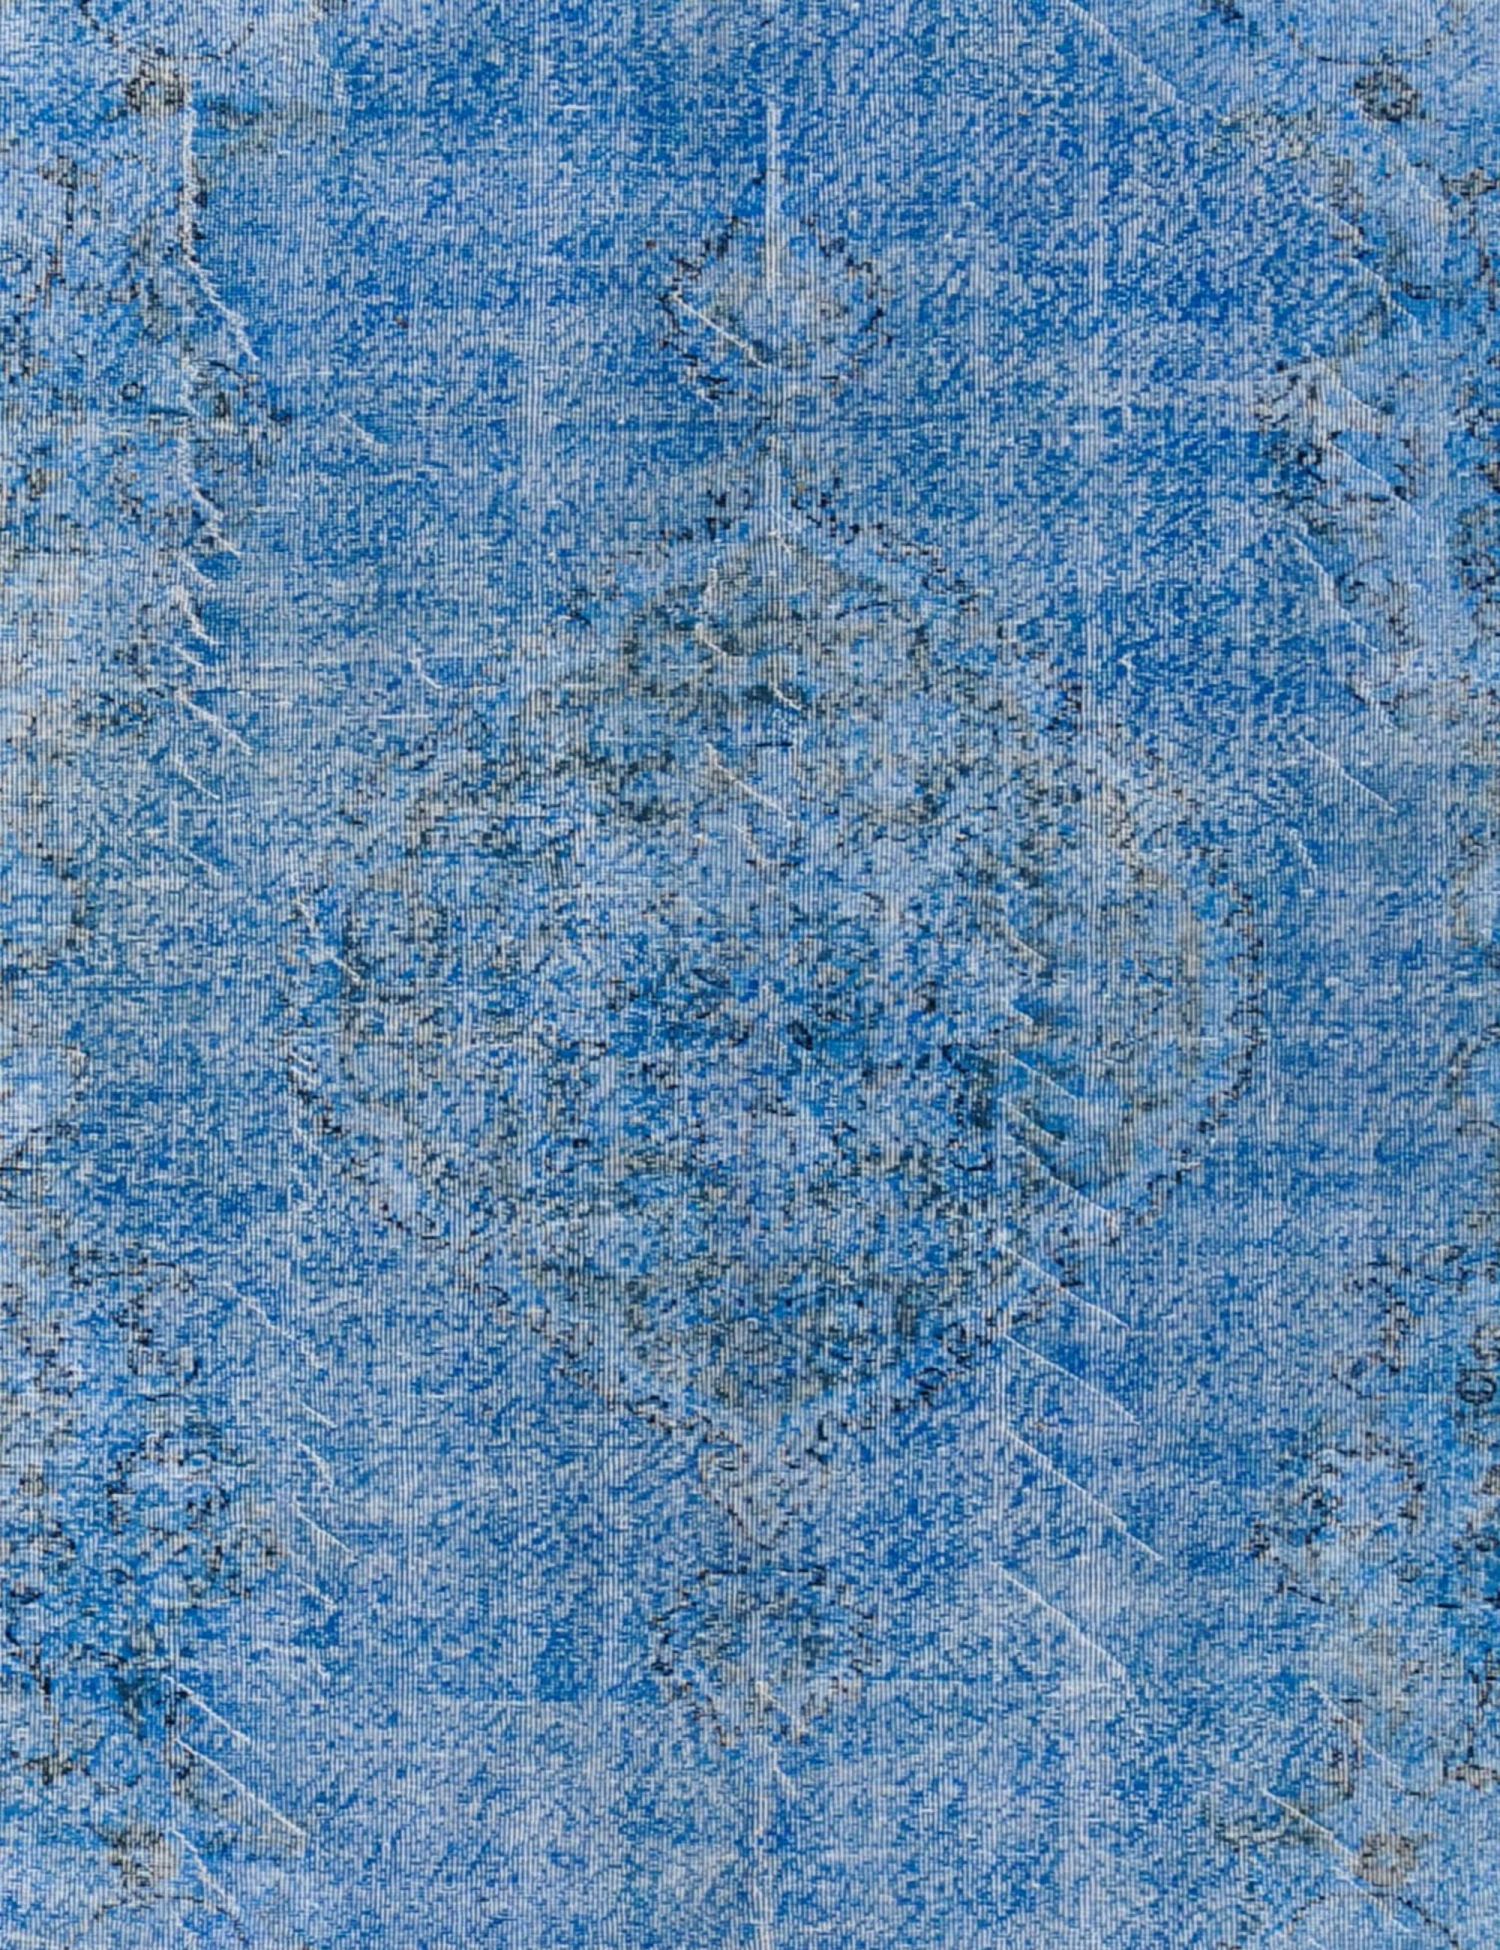 Vintage    Μπλε <br/>320 x 215 cm